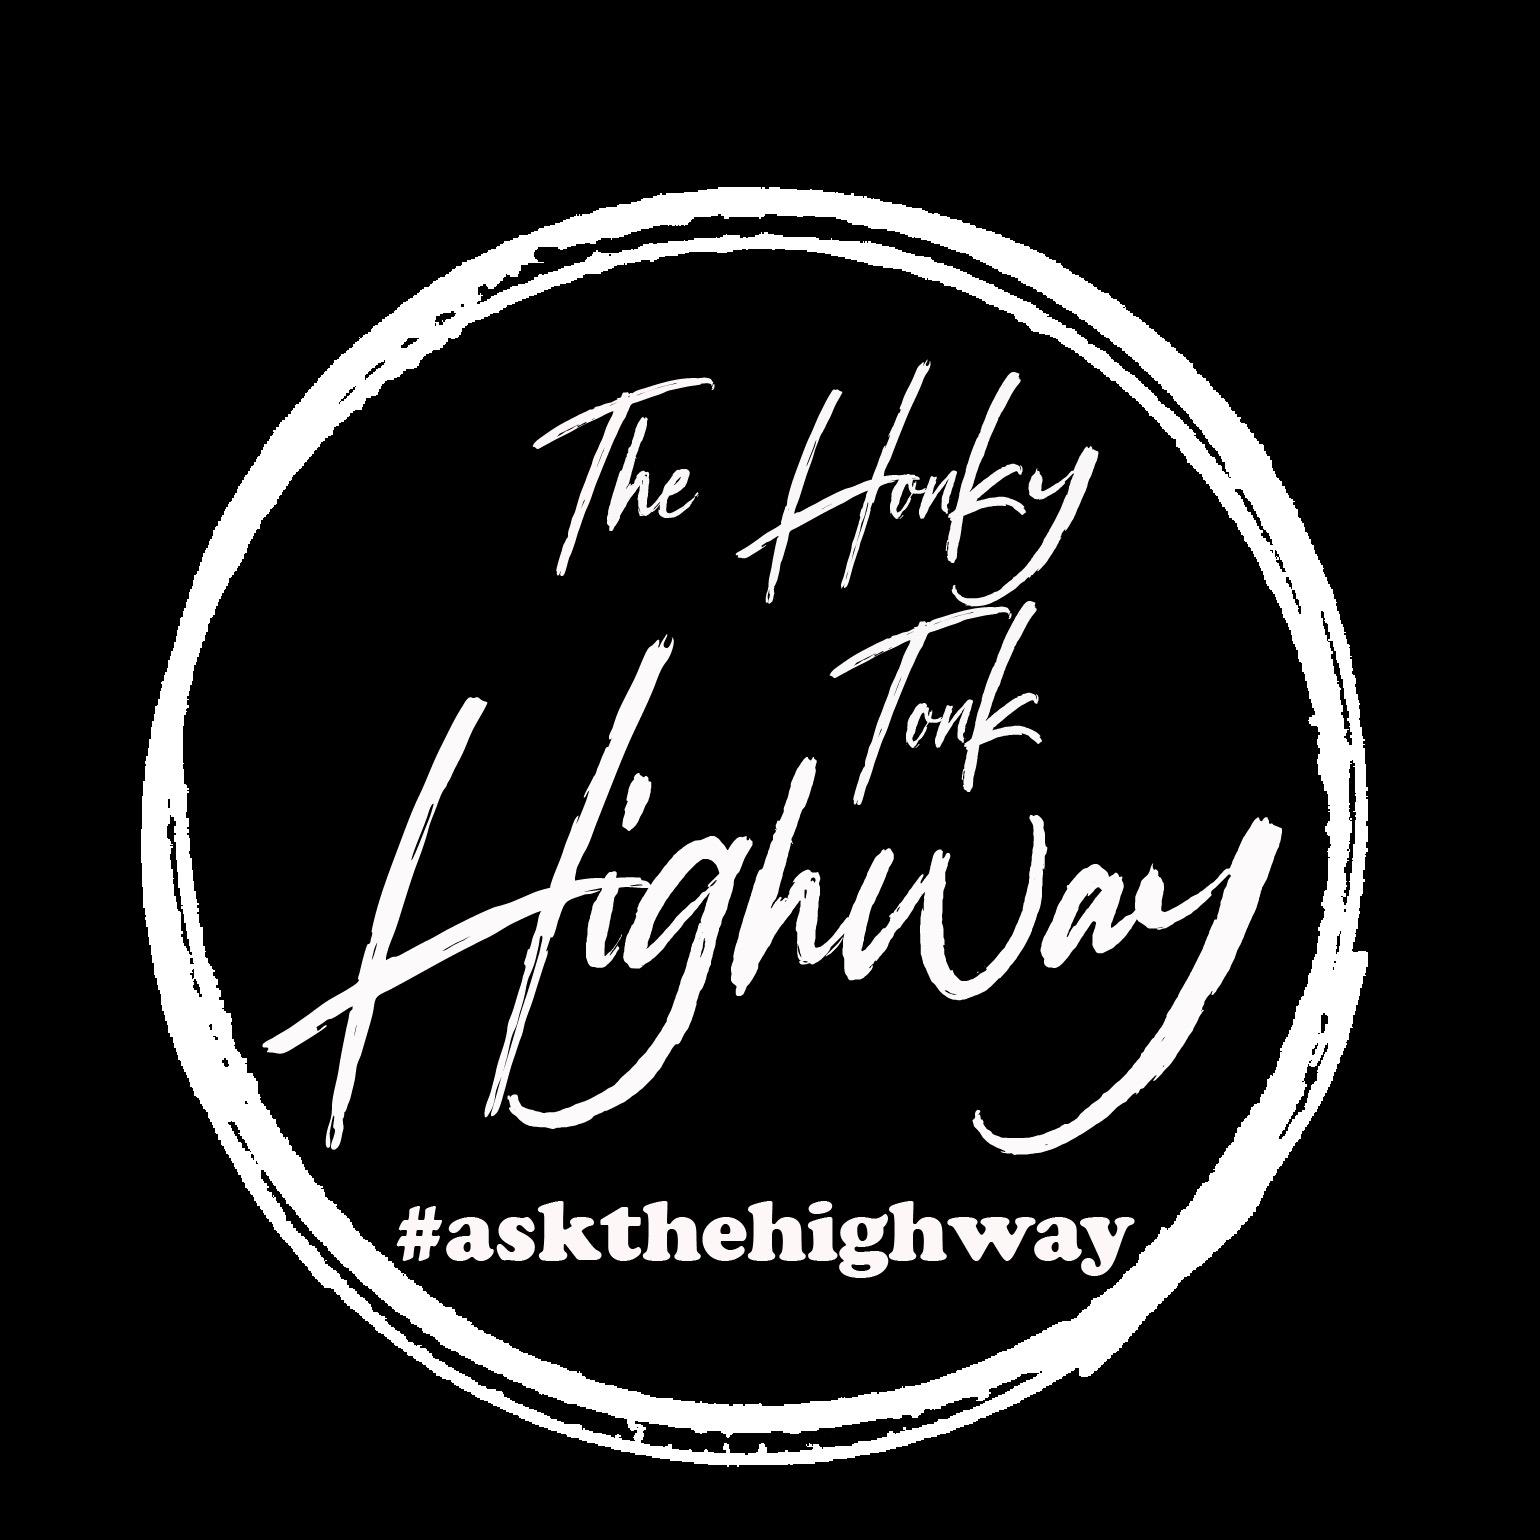 The Honky Tonk Highway